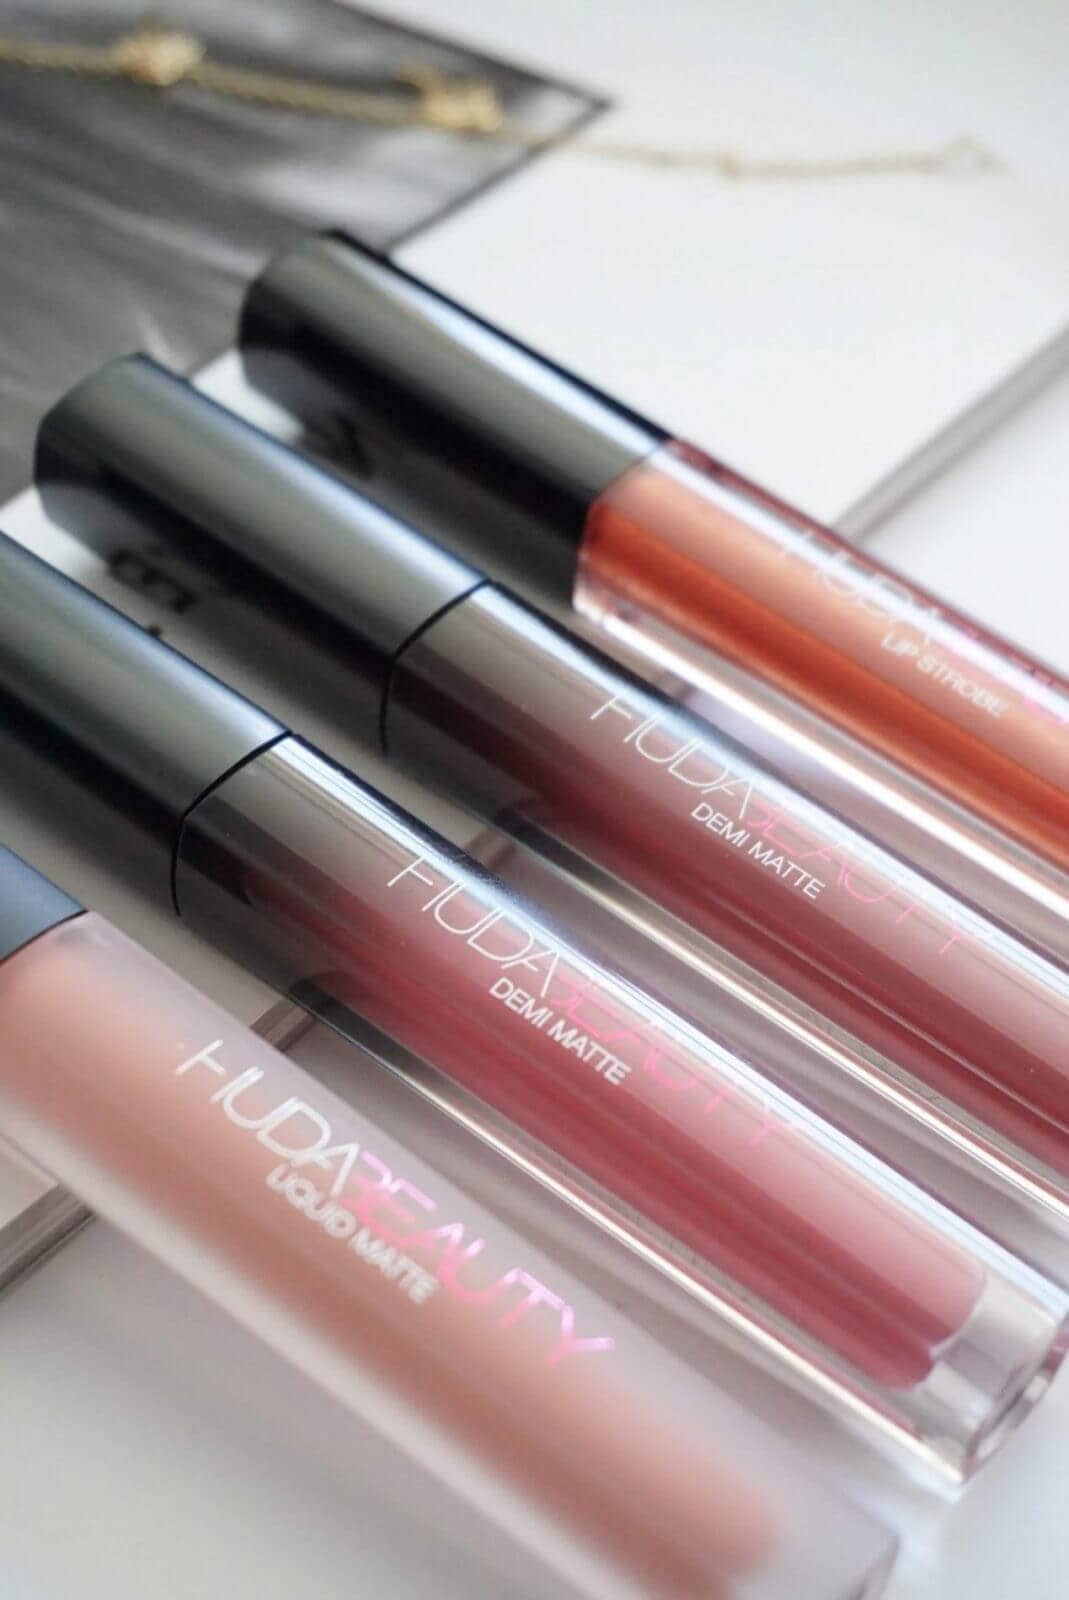 Huda Beauty Liquid Lipsticks